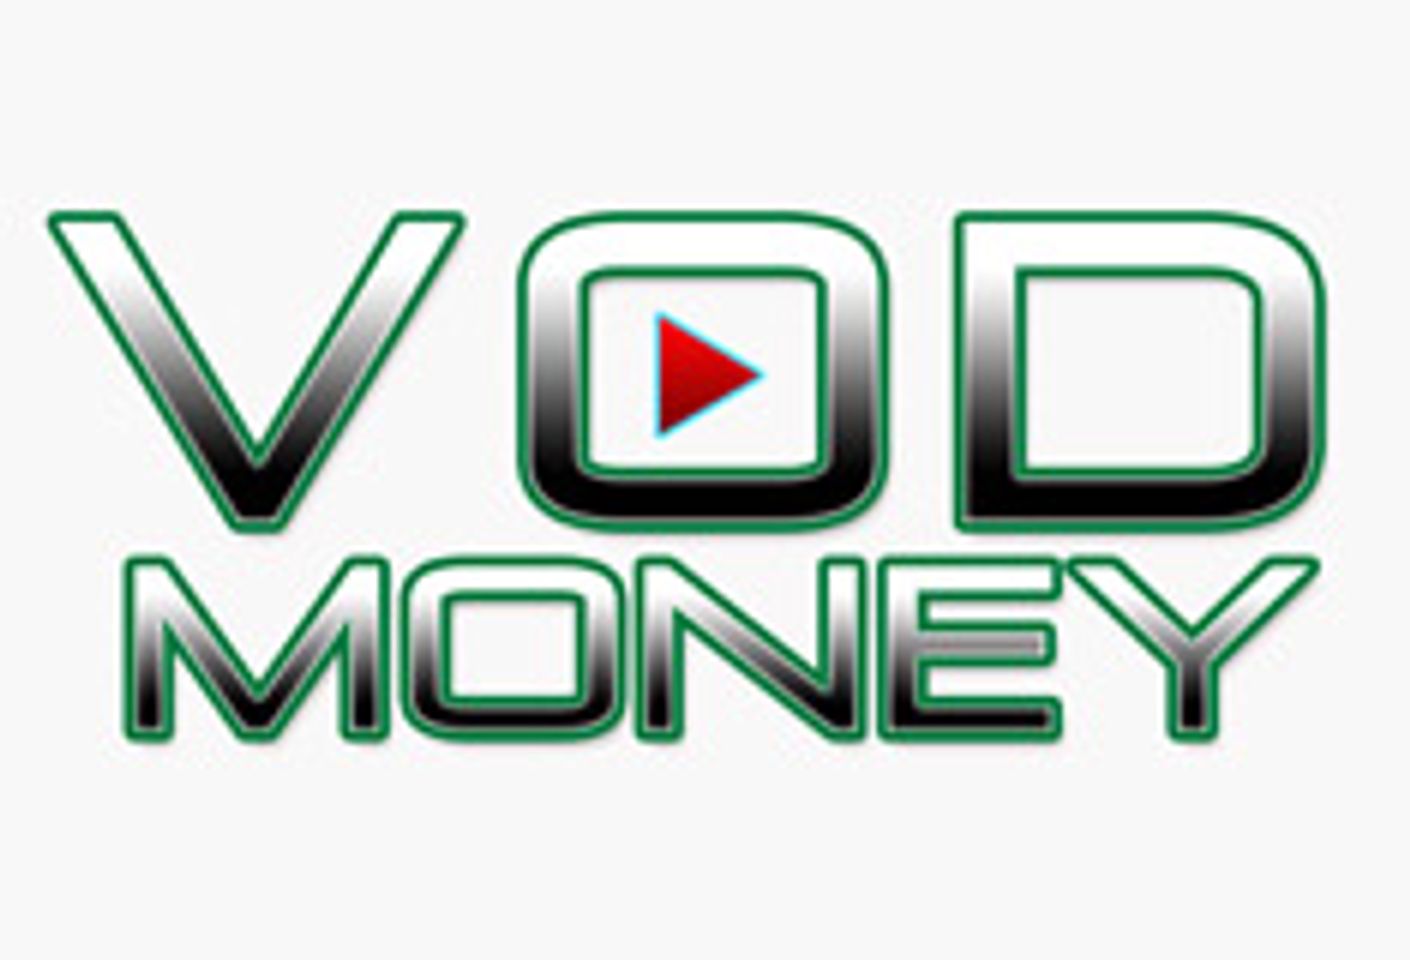 VODMoney.com Adds Silverlight Cross Platform Streaming Capability